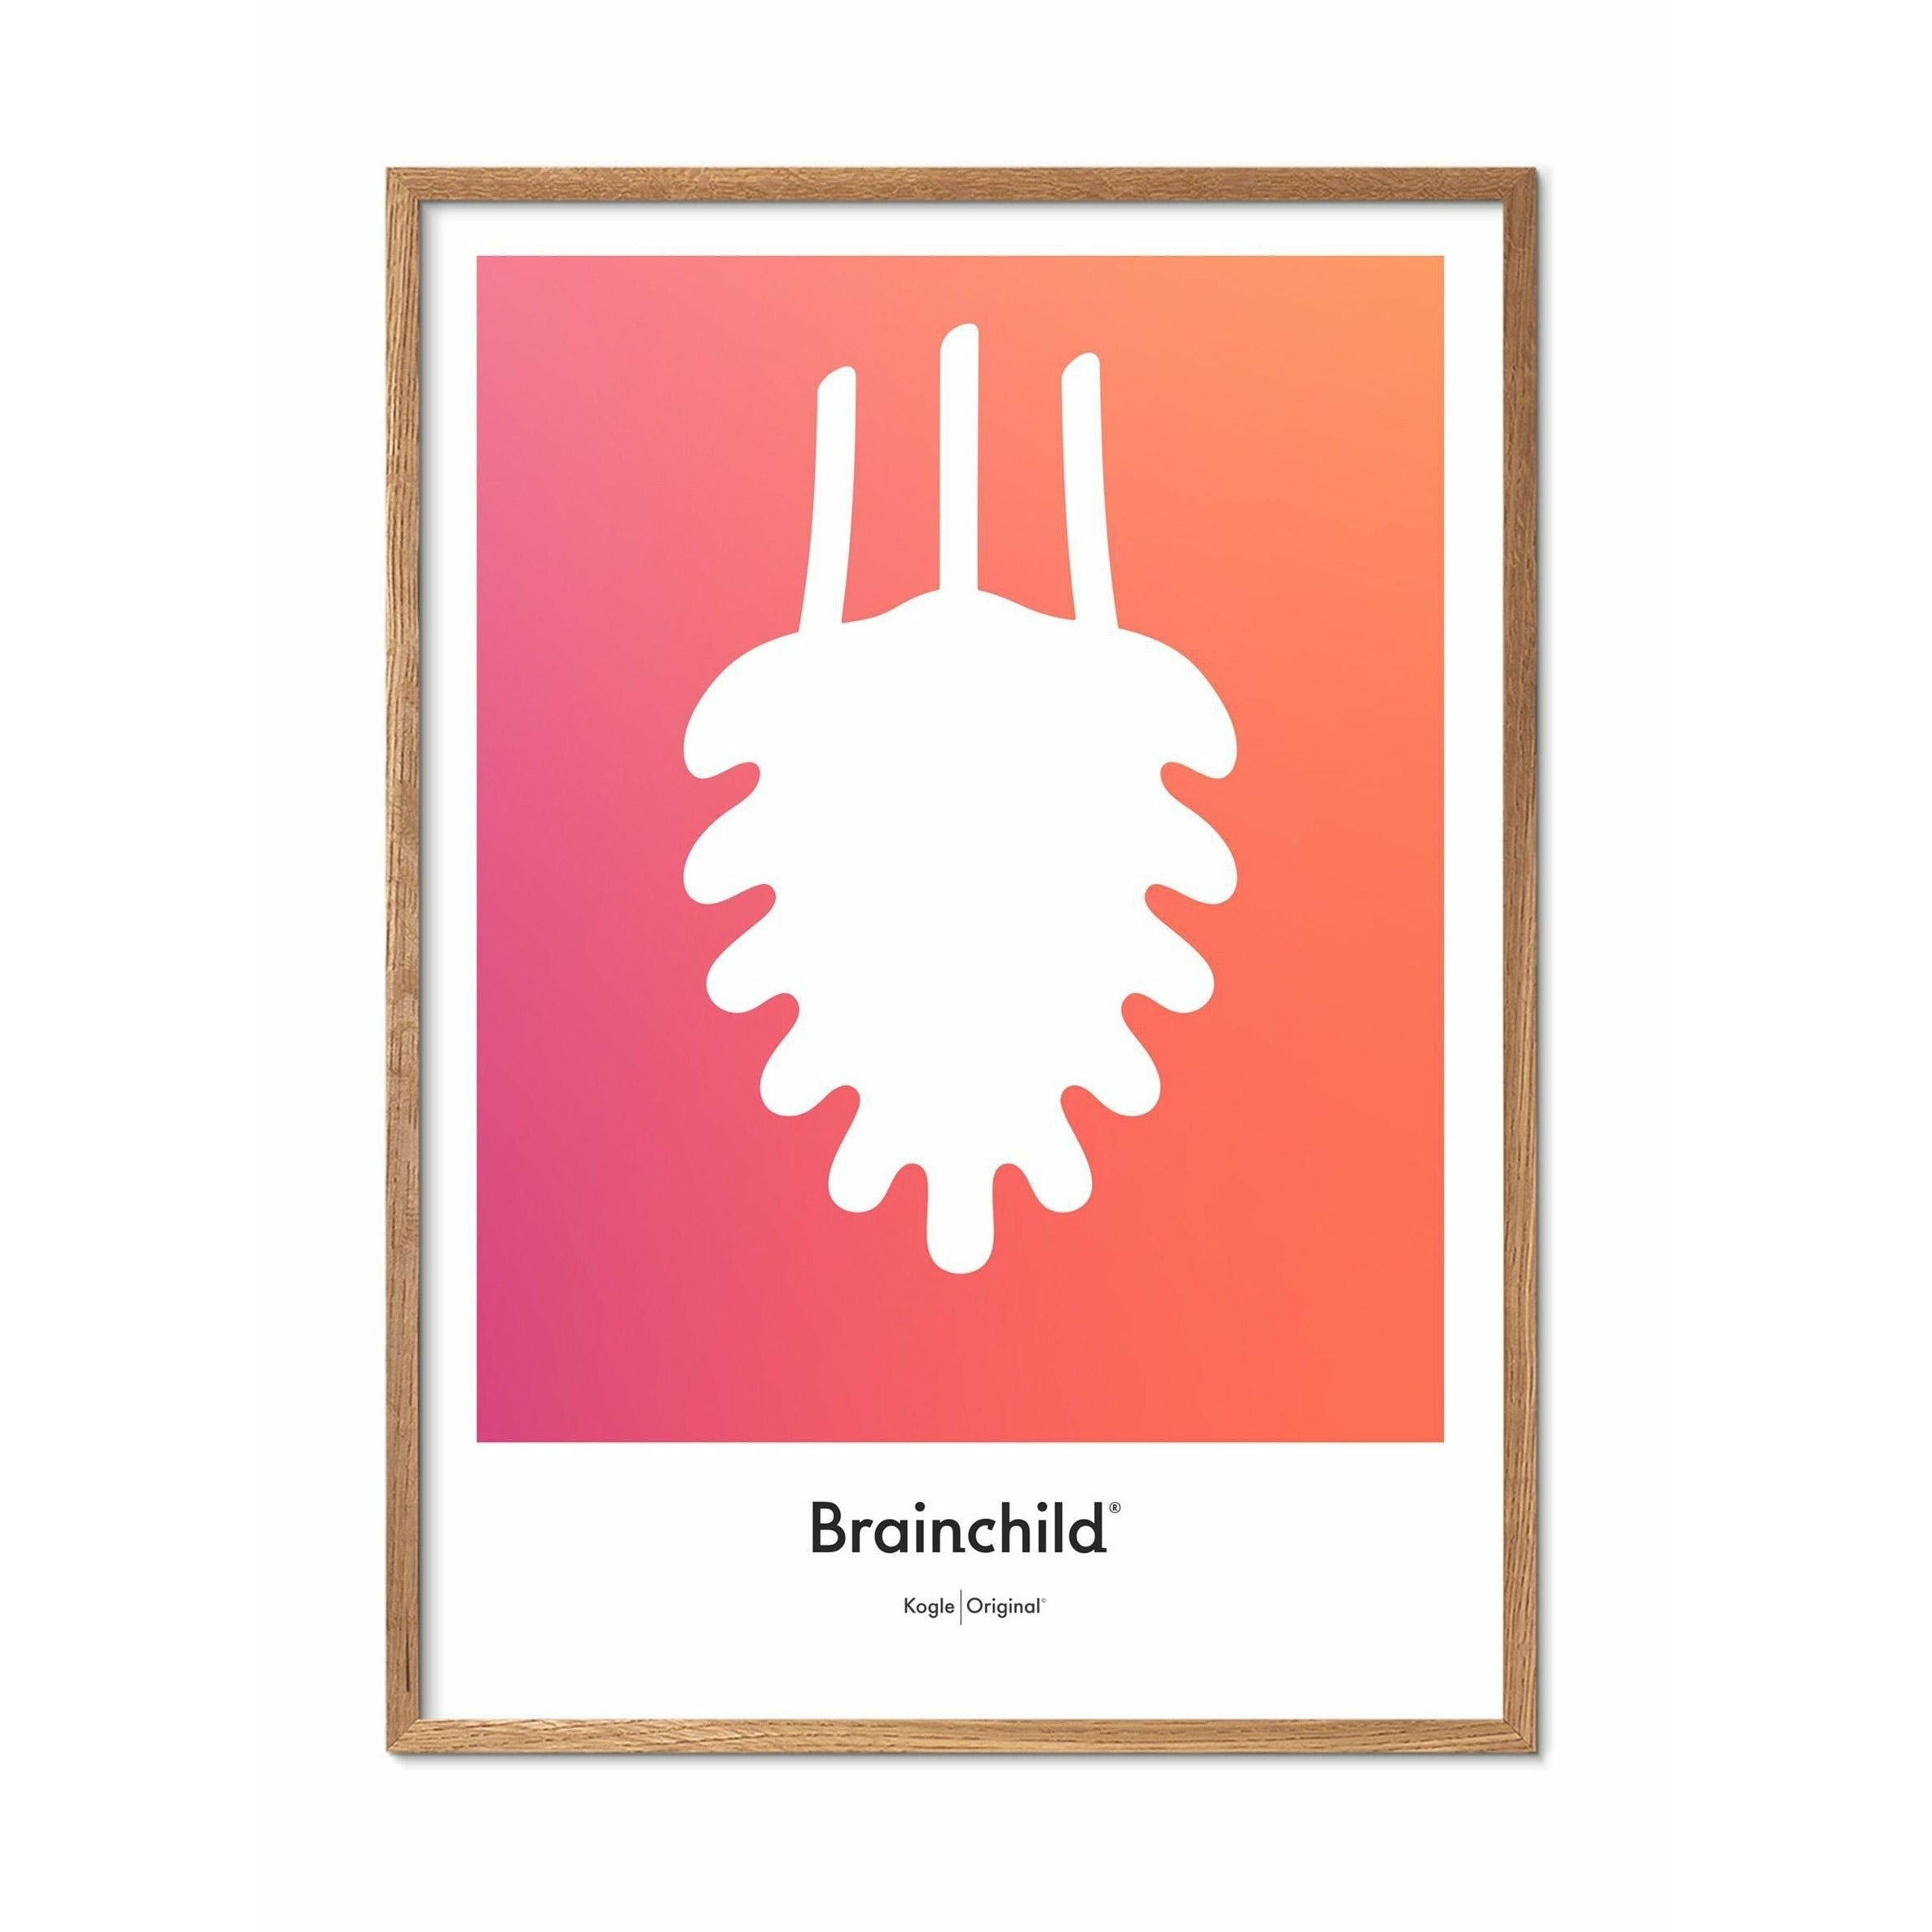 Brainchild Pine Cone Design Icon Poster, Frame Made Of Light Wood A5, Orange